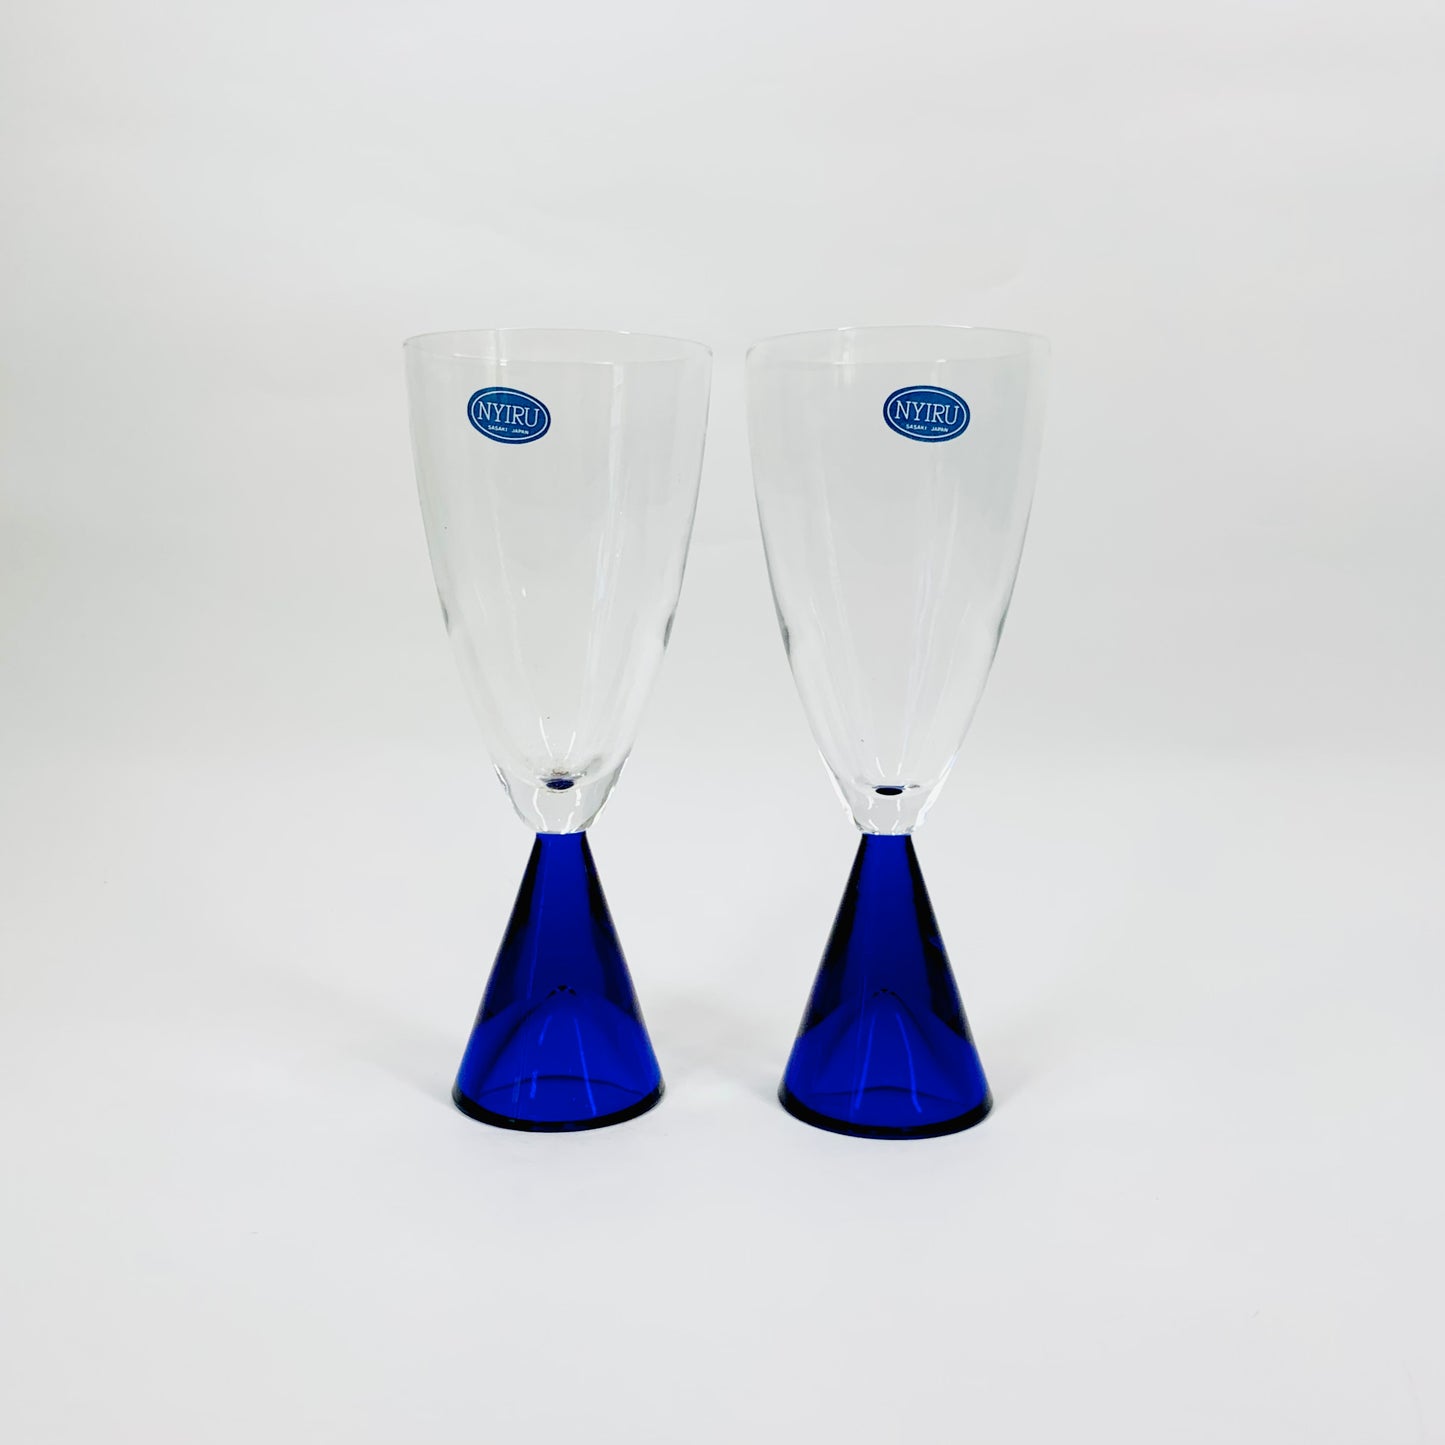 Rare 1980s Japanese Sasaki Nyiru blue paperweight stem glasses